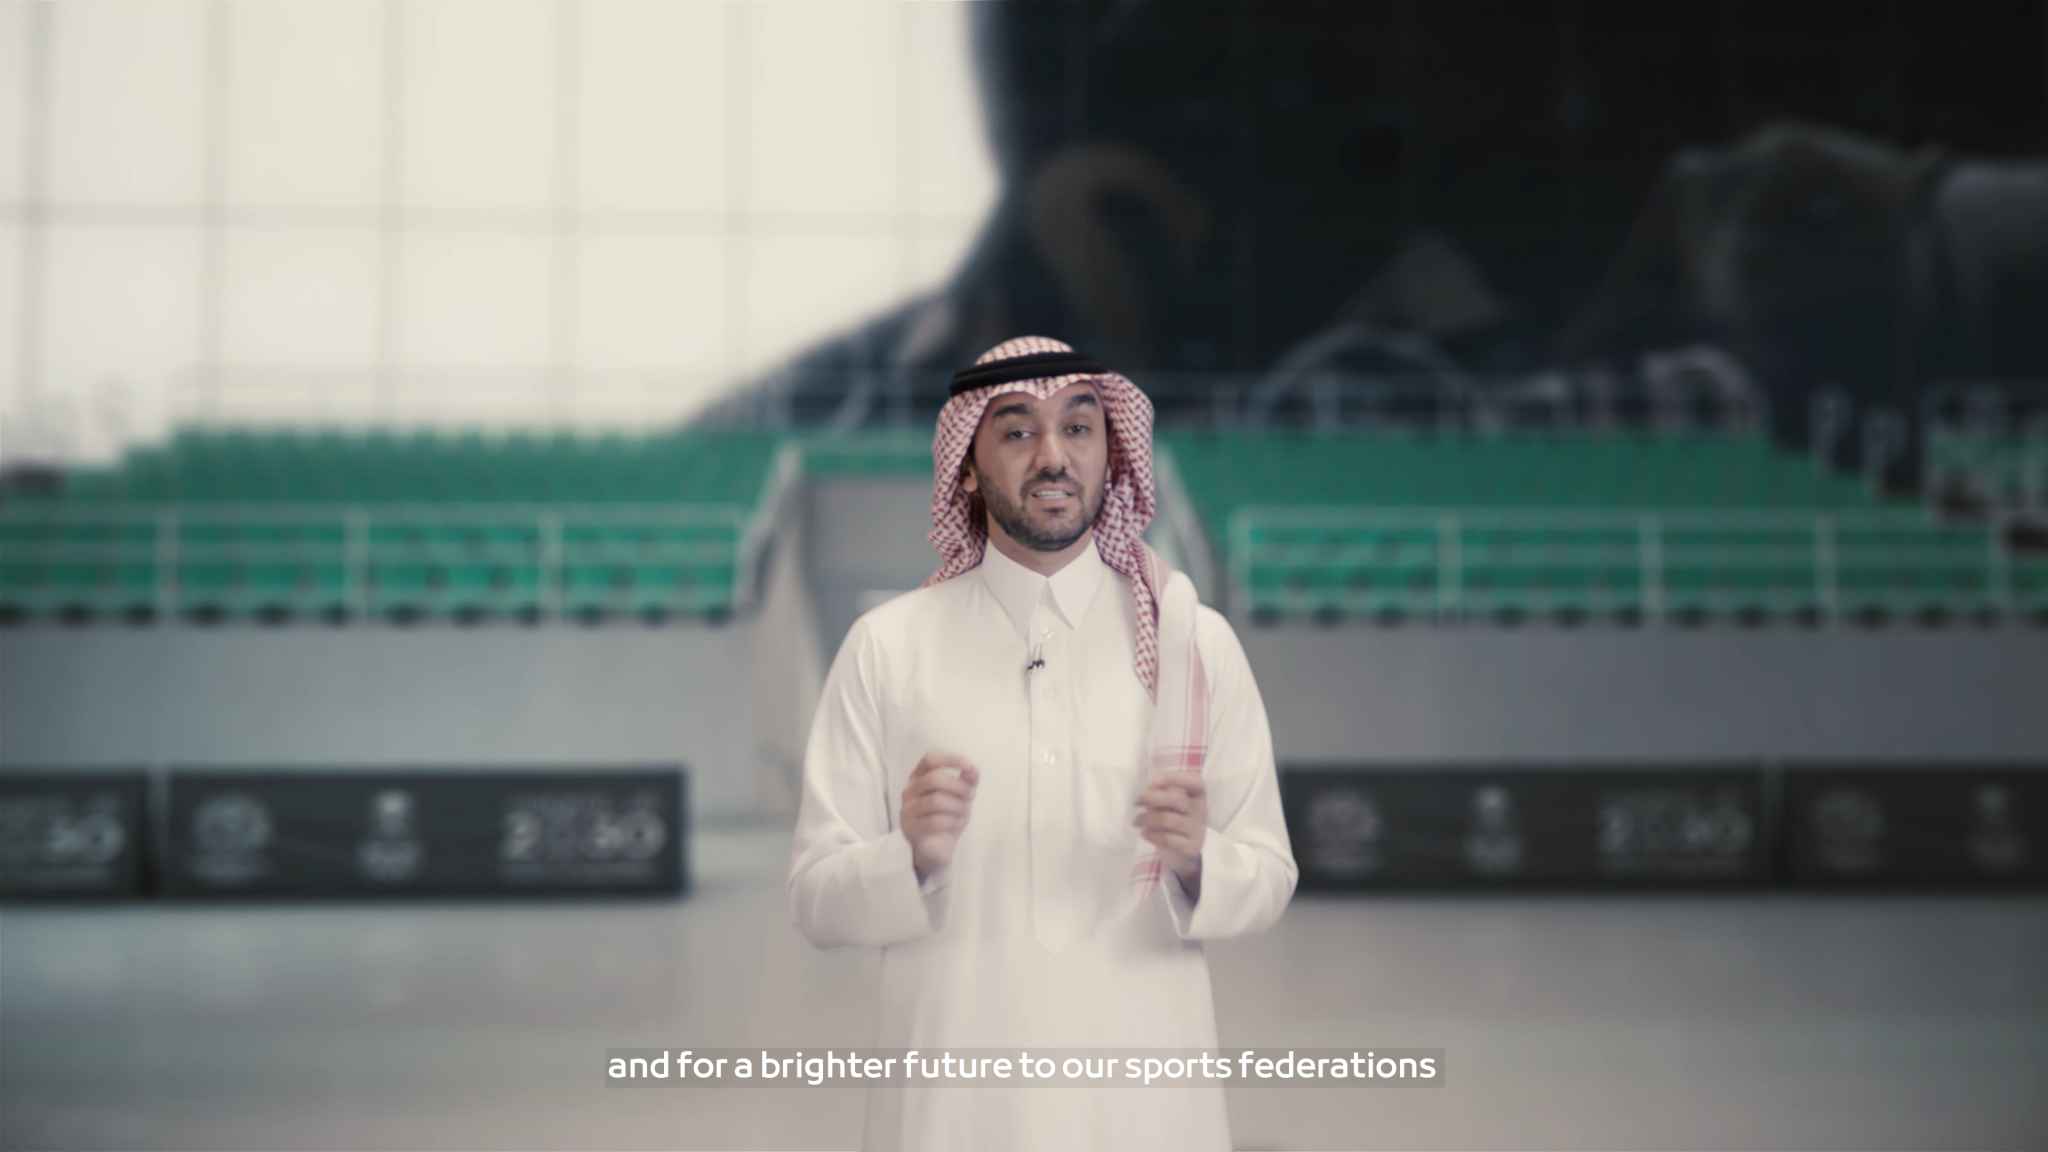 The SAOC President Prince Abdulaziz bin Turki Al Faisal said Vision 2030 had prompted "a remarkable development" in Saudi sports ©SAOC